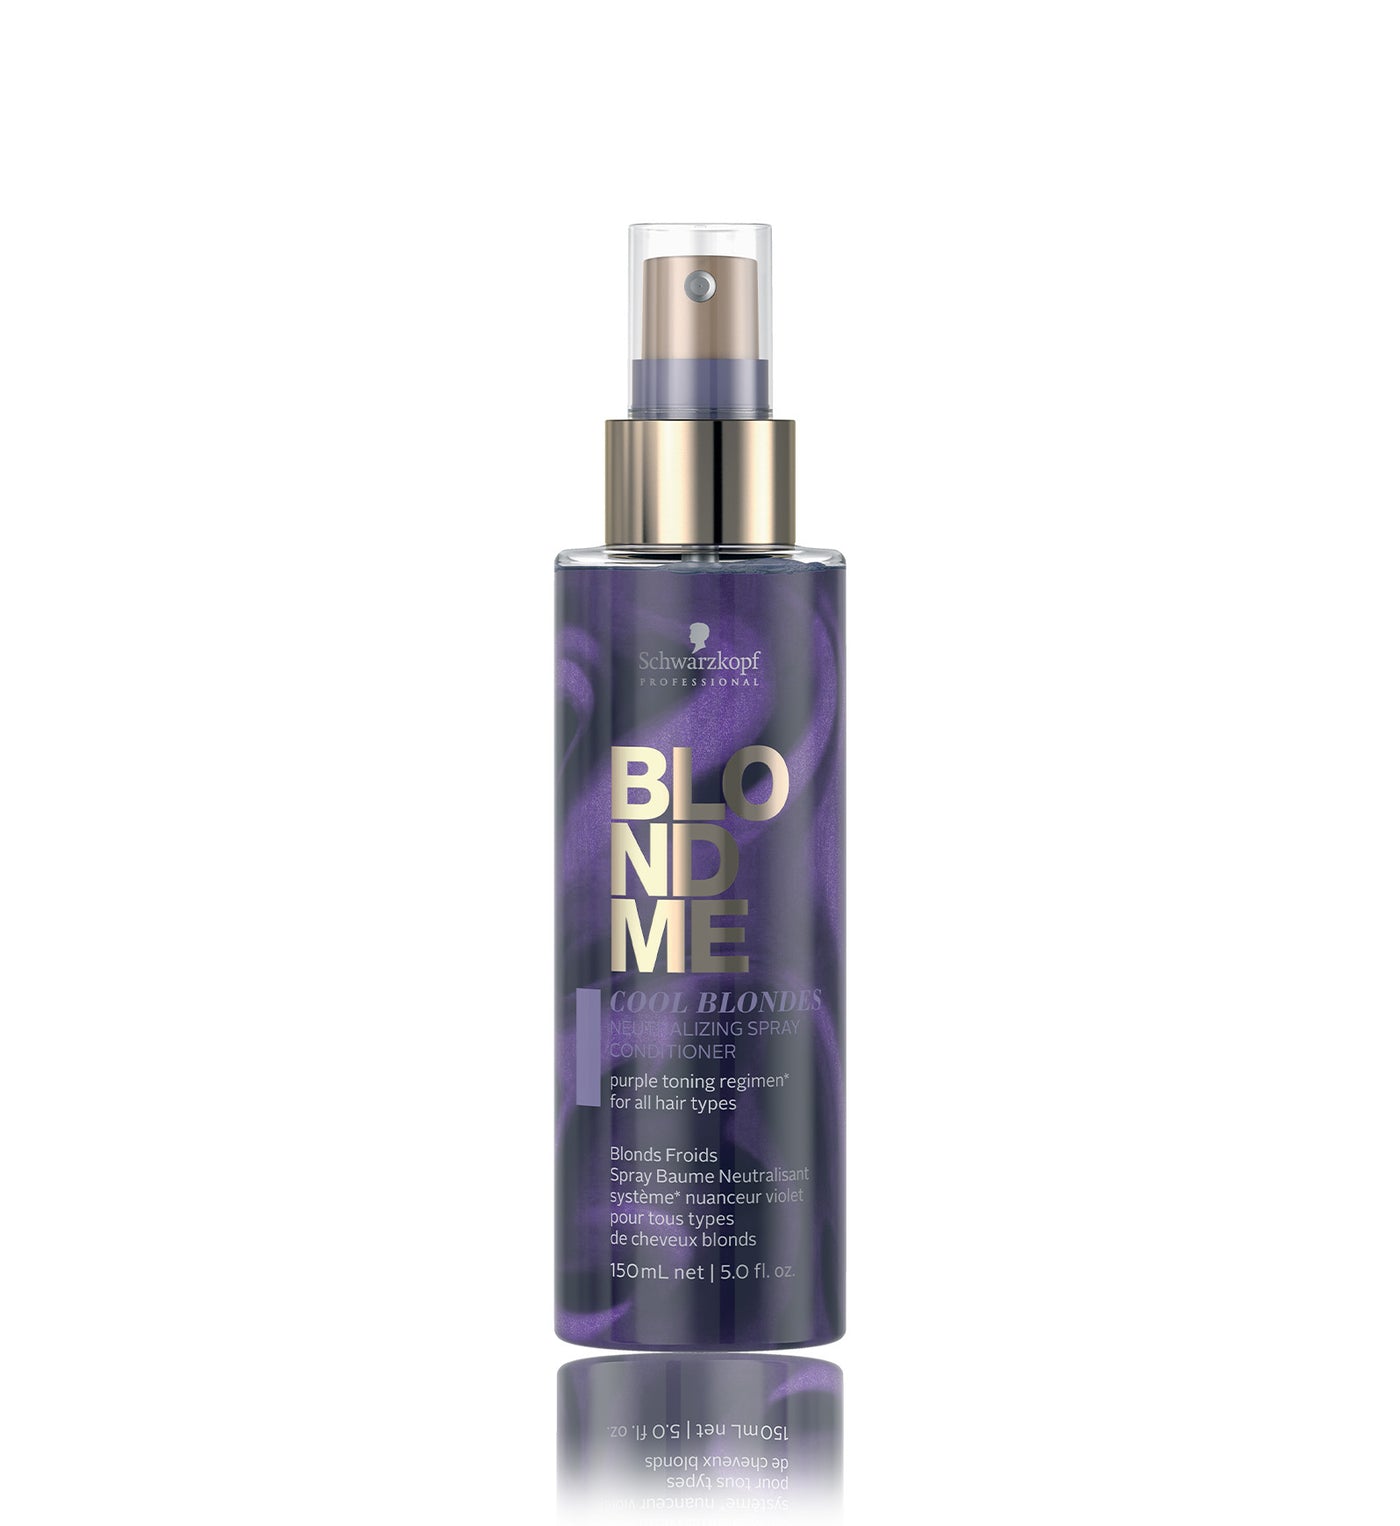 Blond Me-Spray Baume neutralisant-150ml